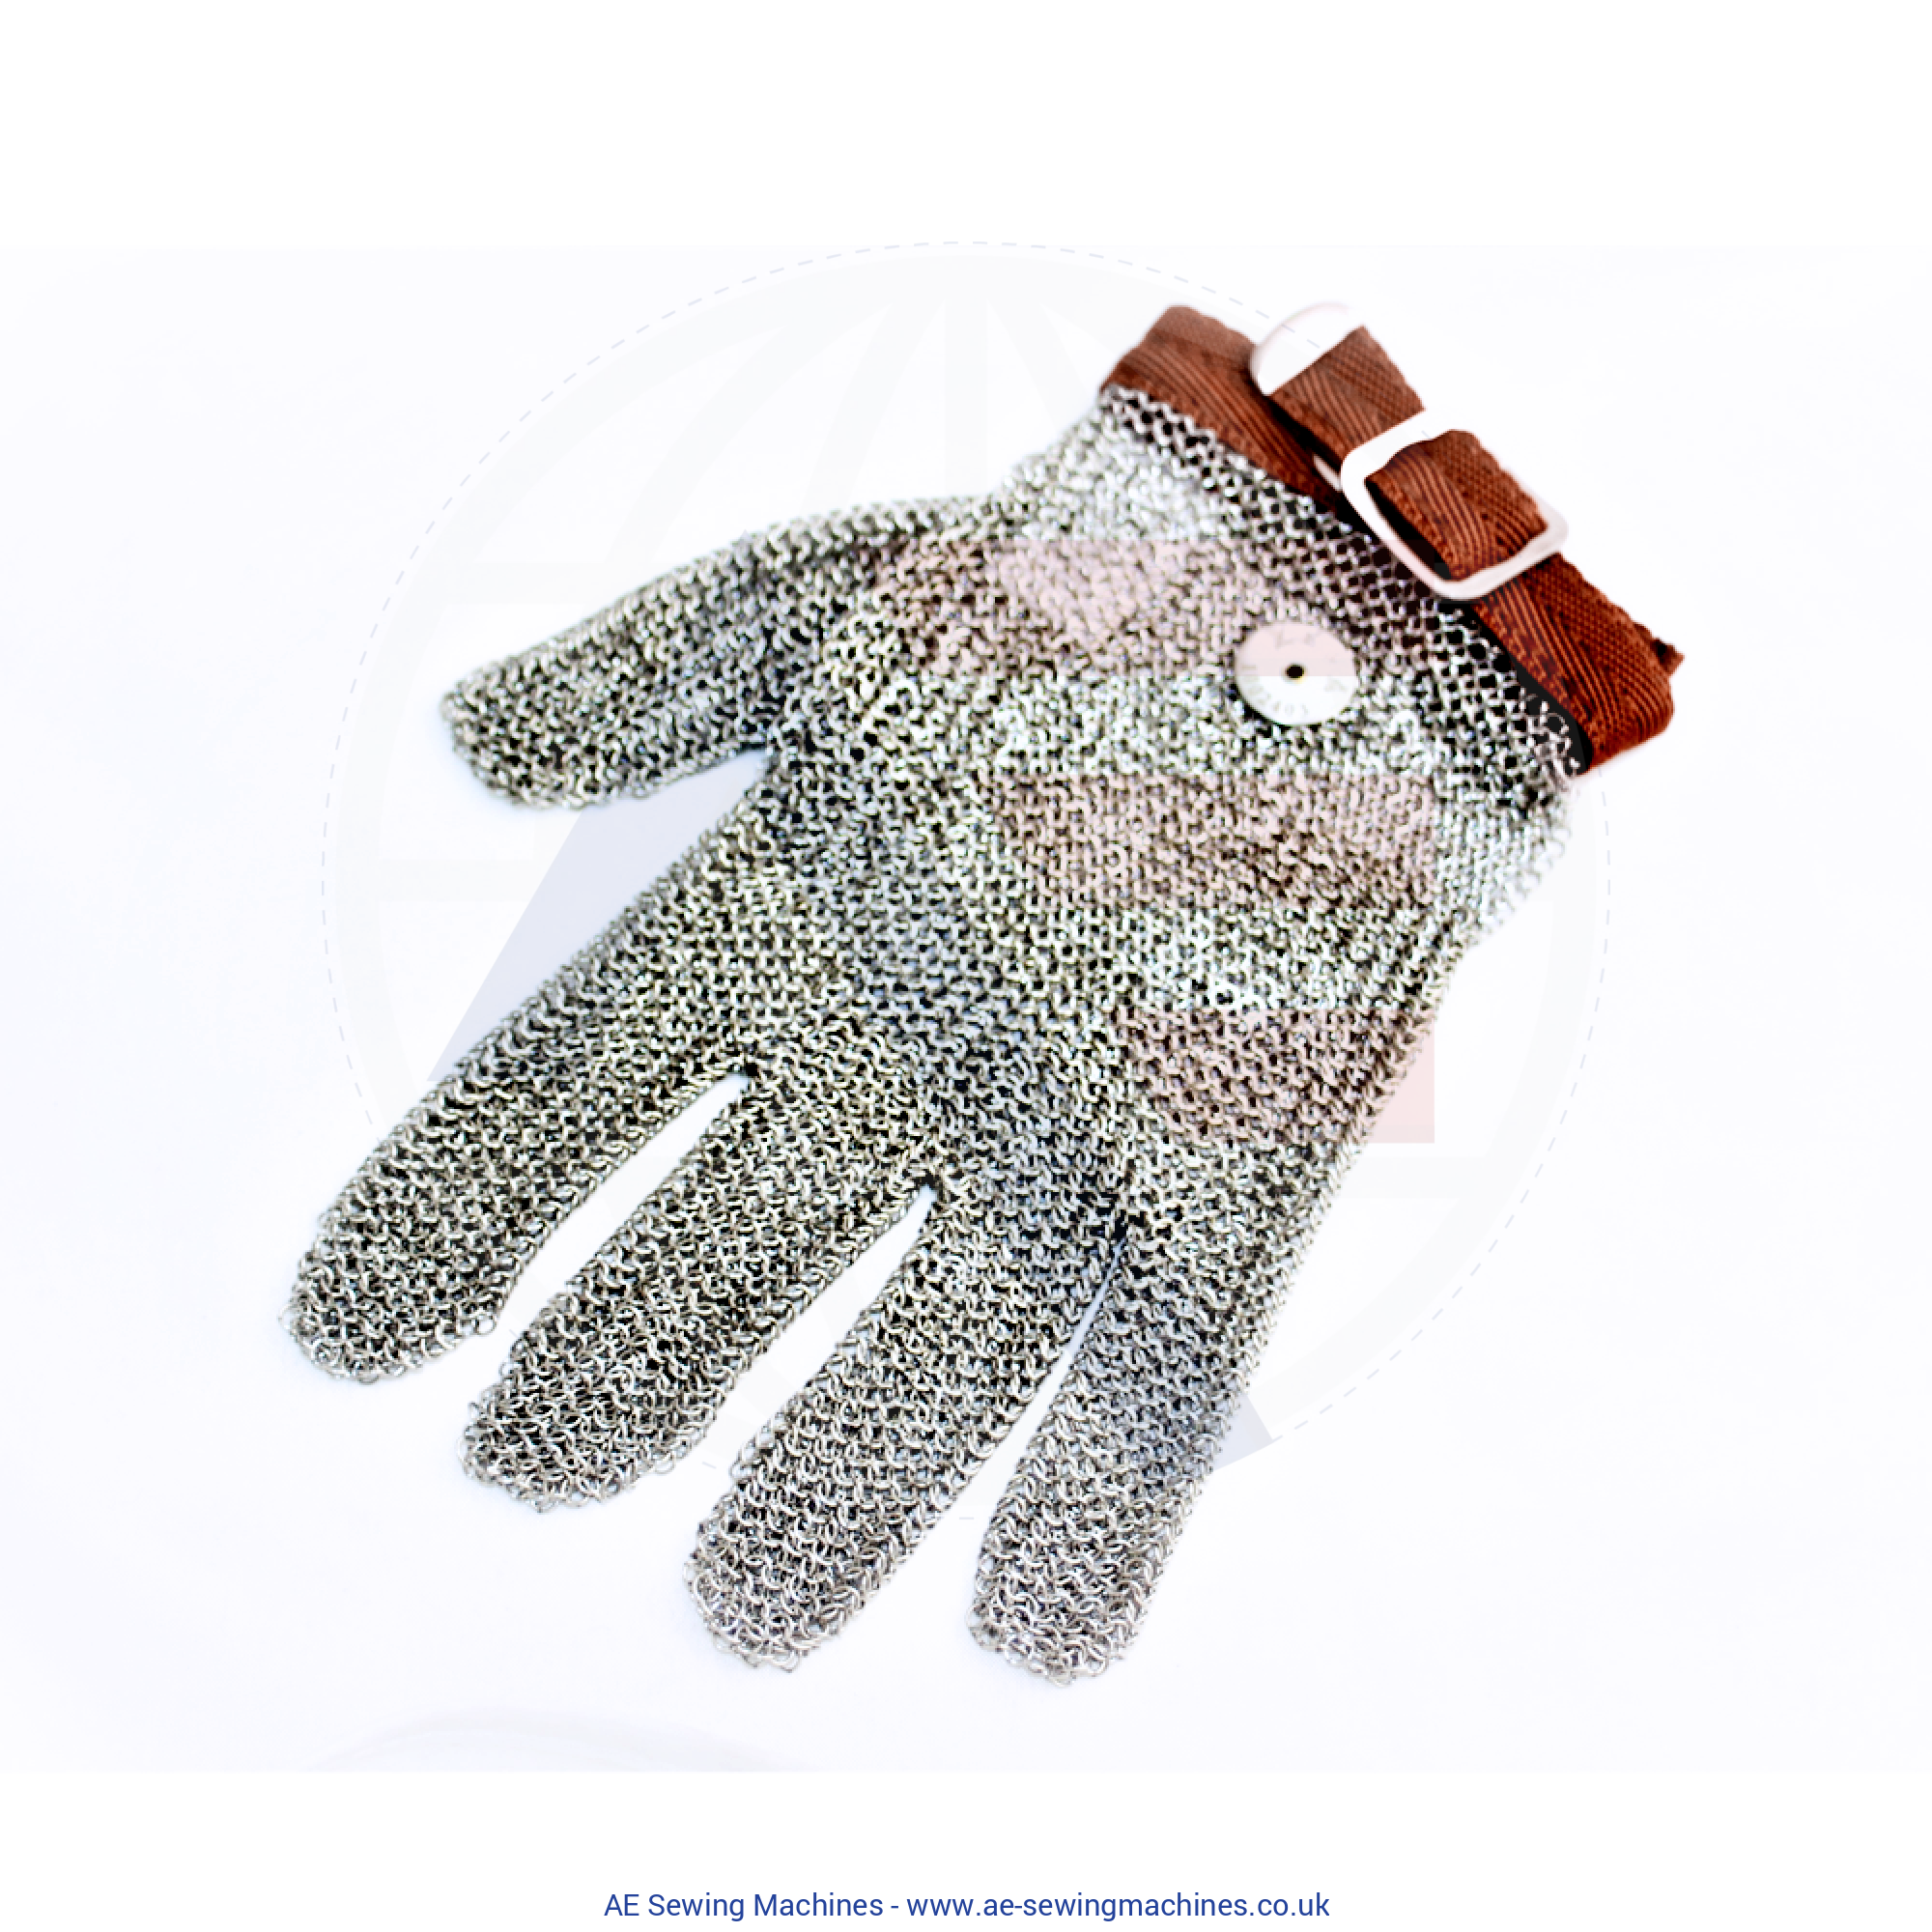 Chainmailglove Protective Safety Glove Xxs